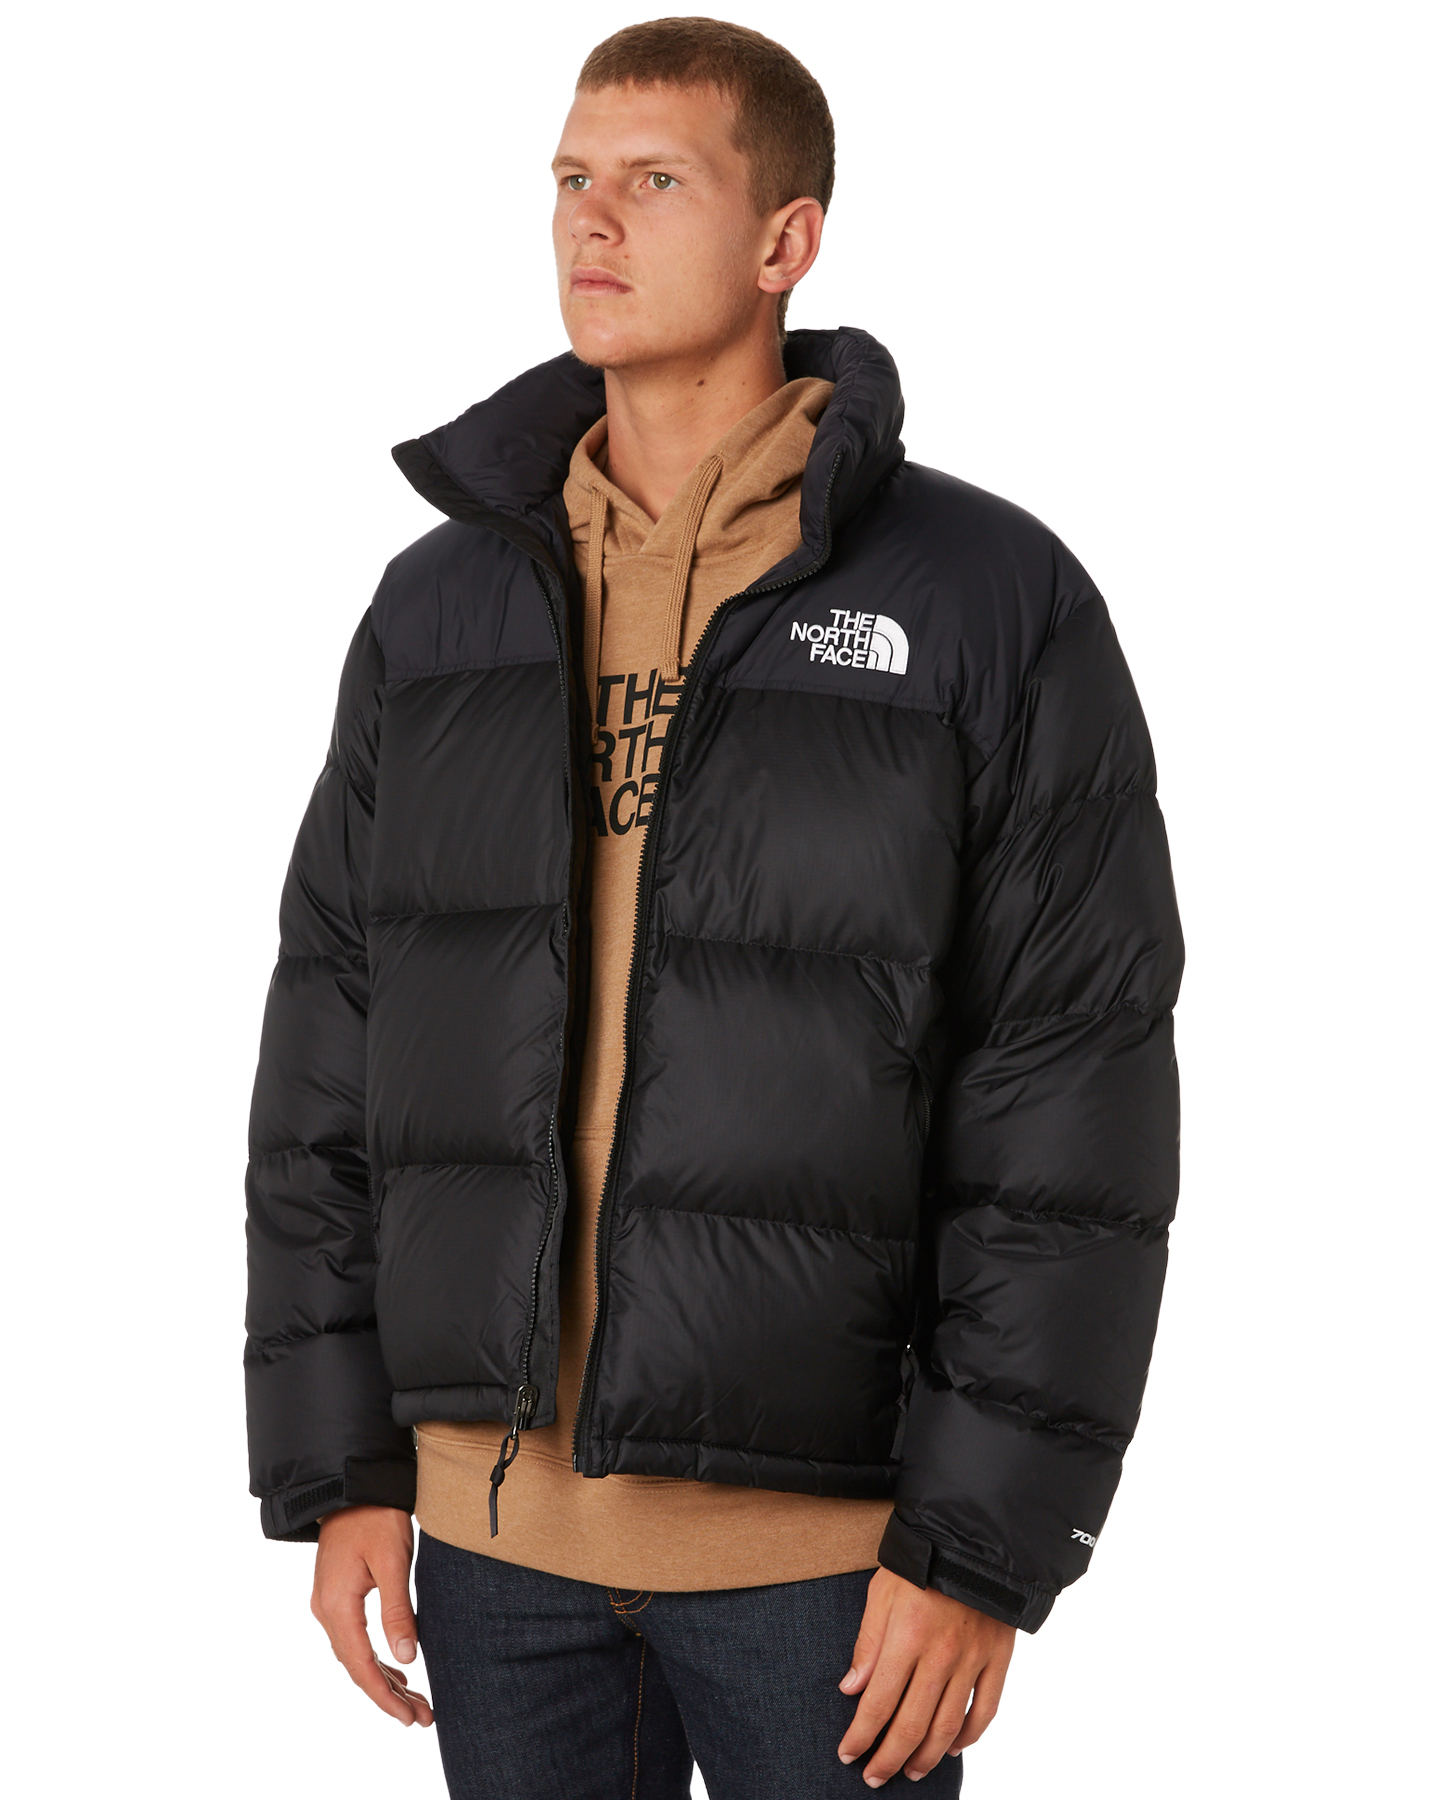 northface jacket sale